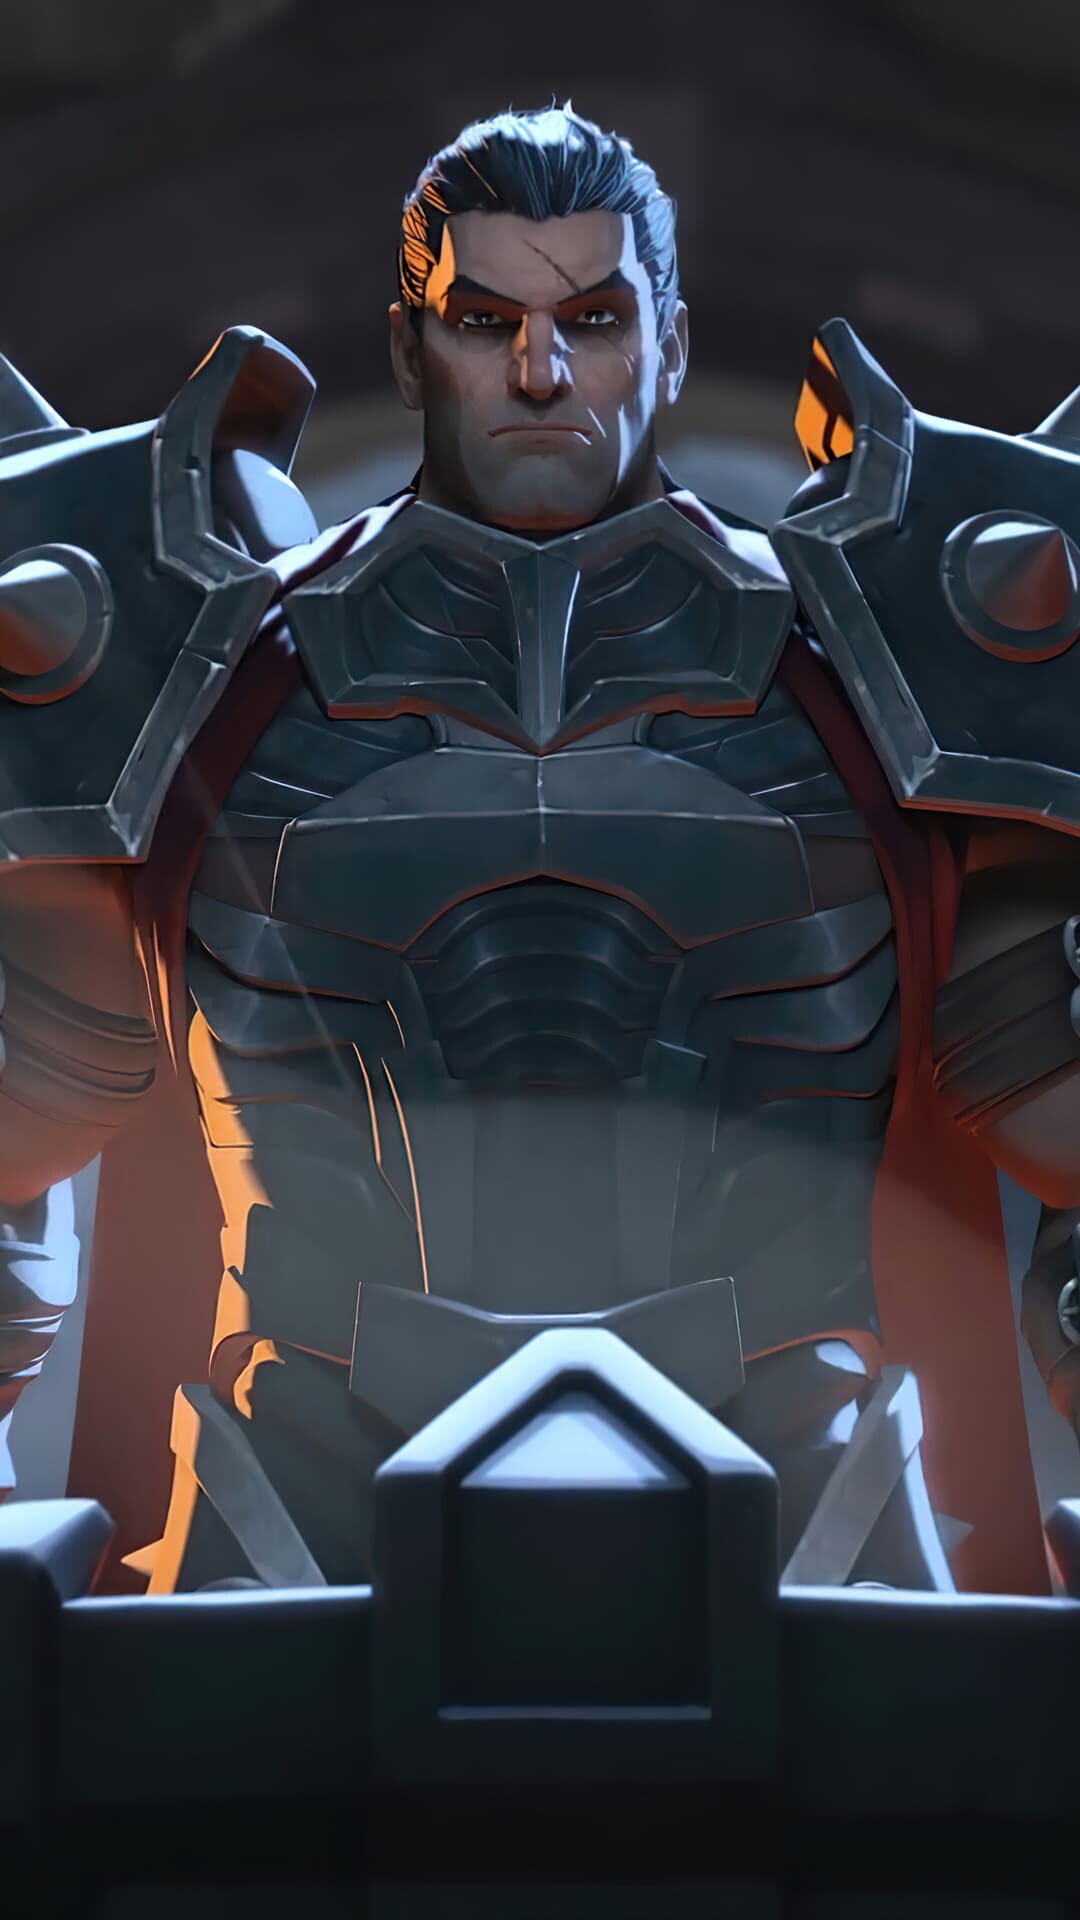 League of Legends: Darius, the Hand of Noxus, Fighter, Juggernaut. 1080x1920 Full HD Background.